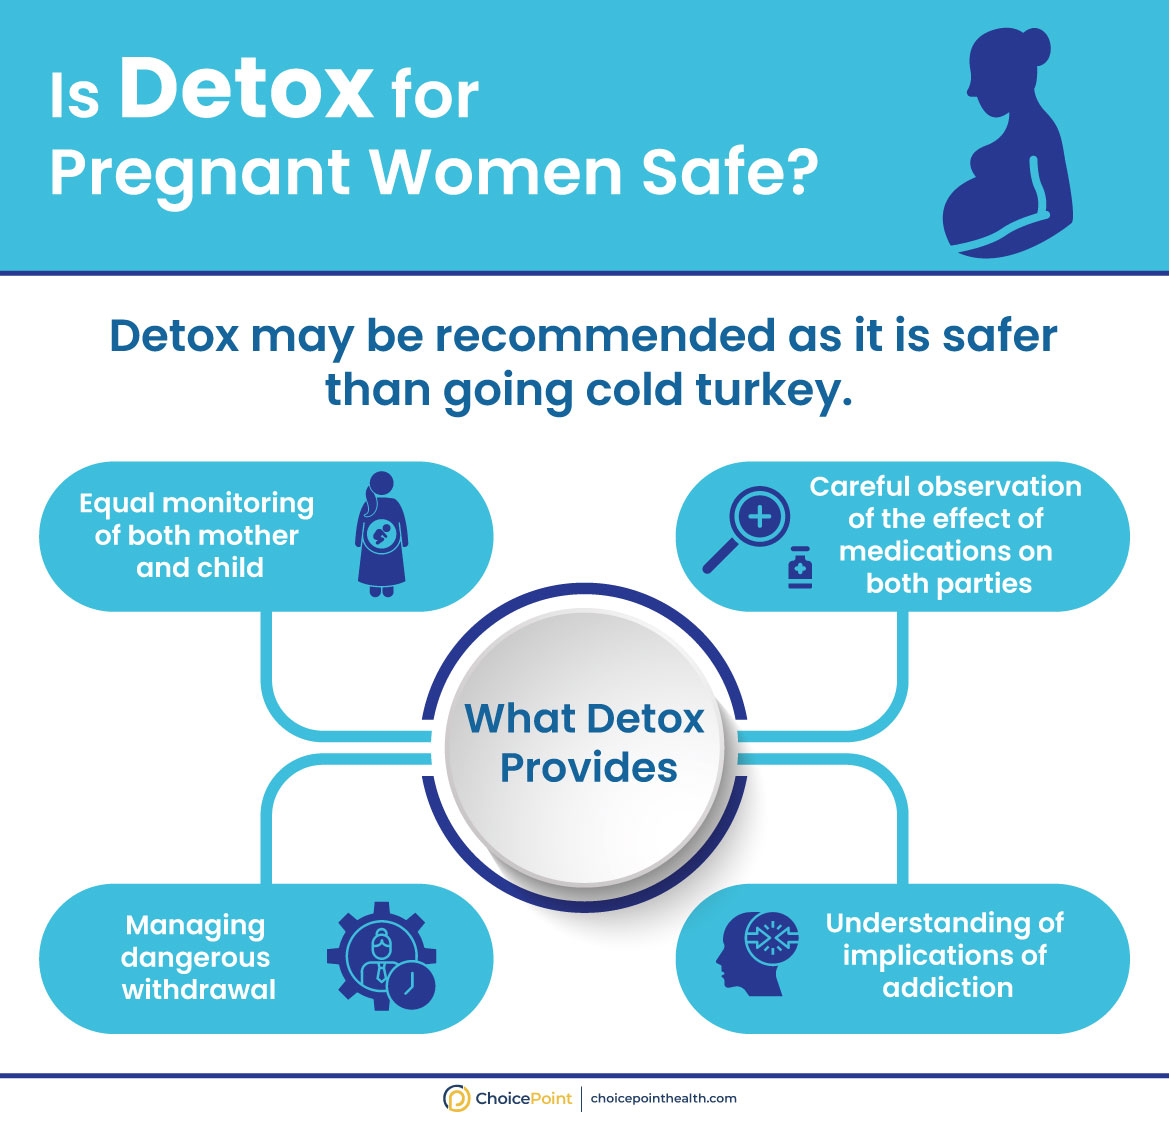 Is Detox A Safe Option for Pregnant Women?